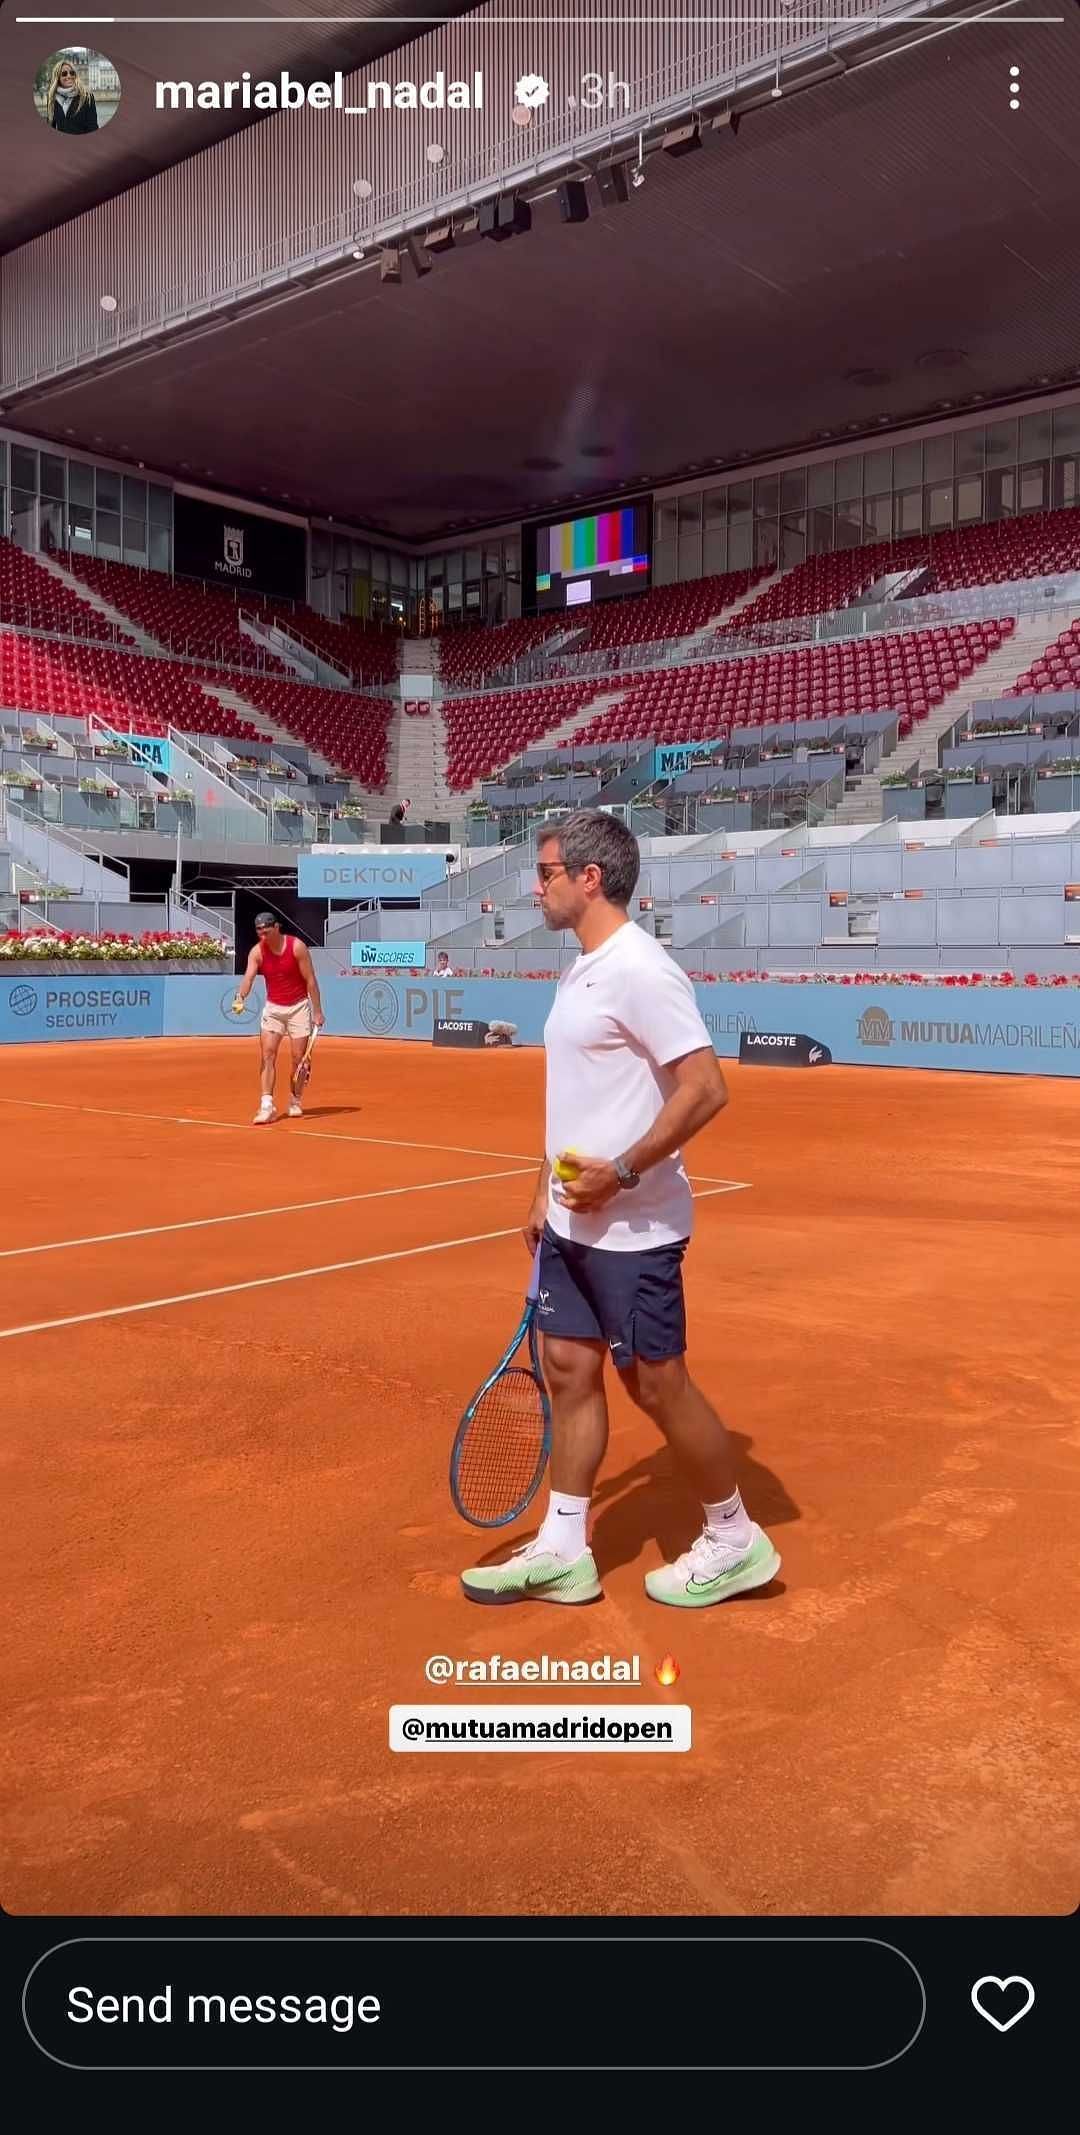 Maribel Nadal shares practice session of Nadal on her Instagram story